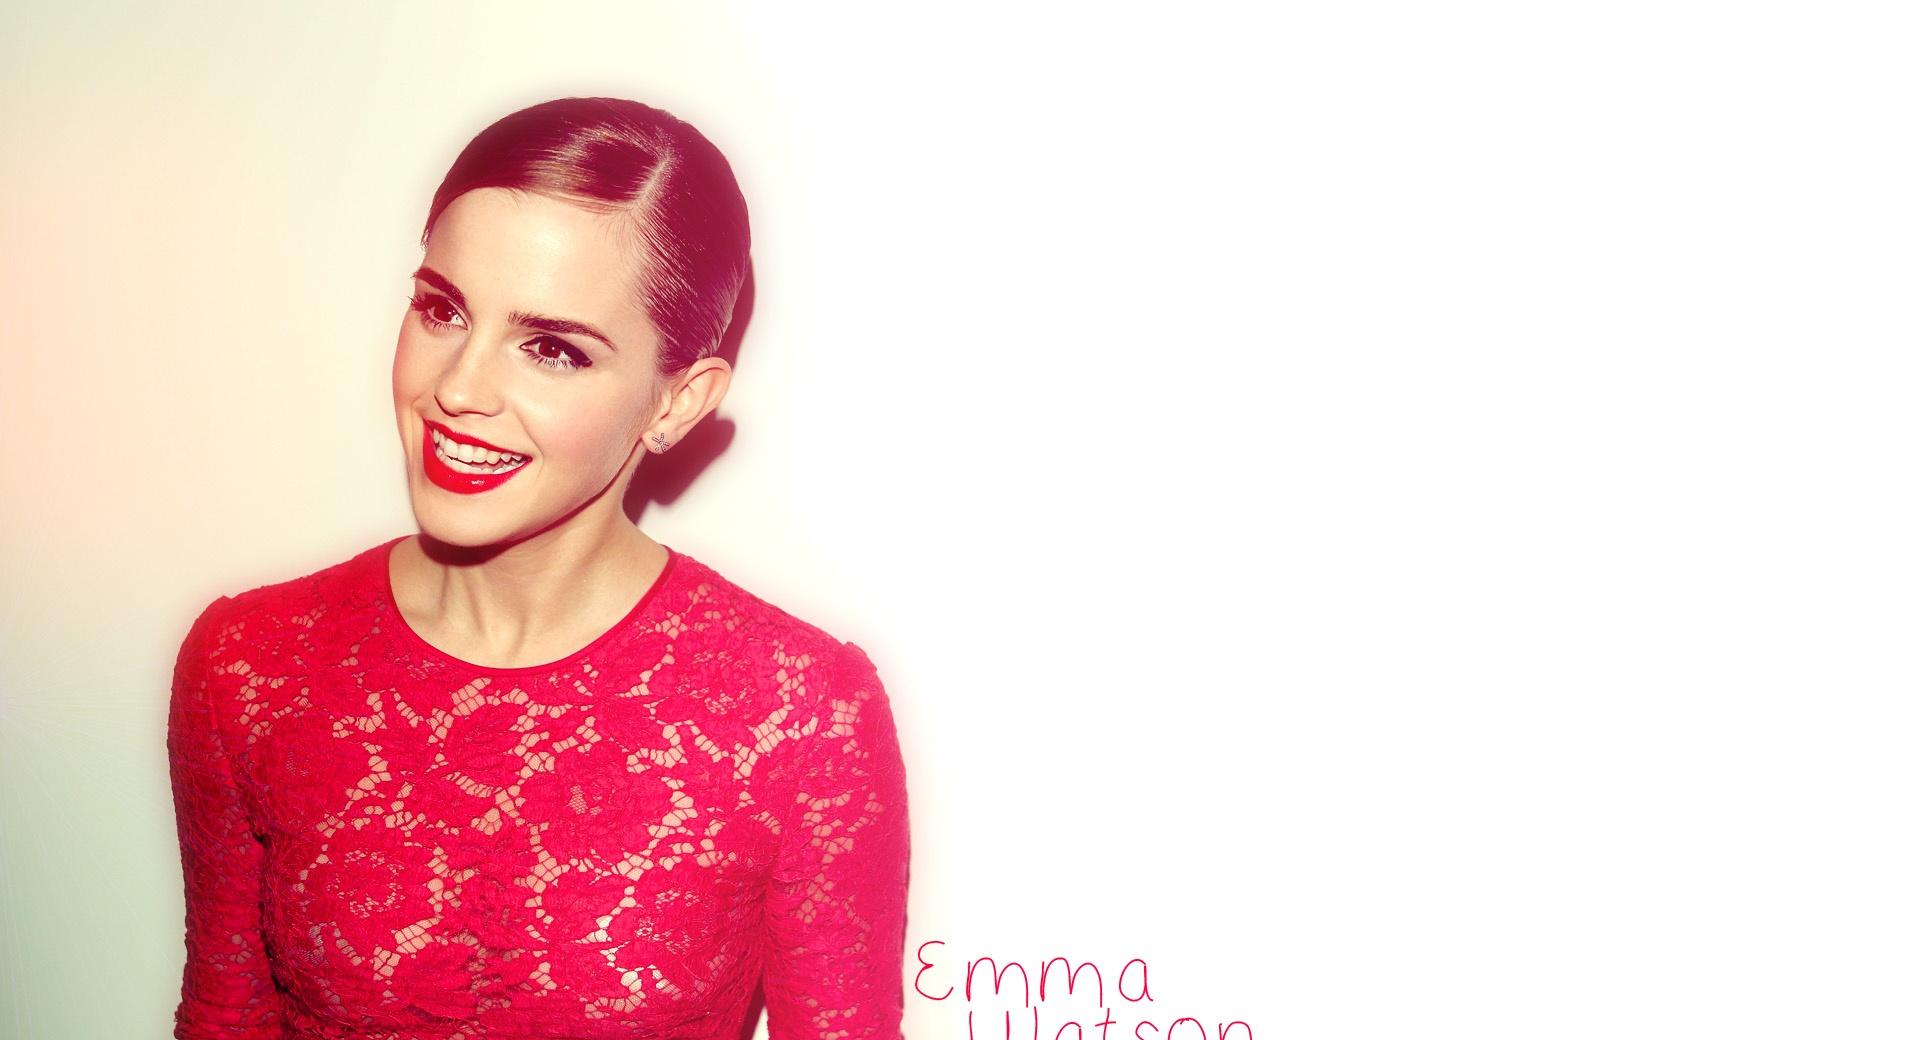 Emma Watson Red Dress (2012) at 1024 x 1024 iPad size wallpapers HD quality